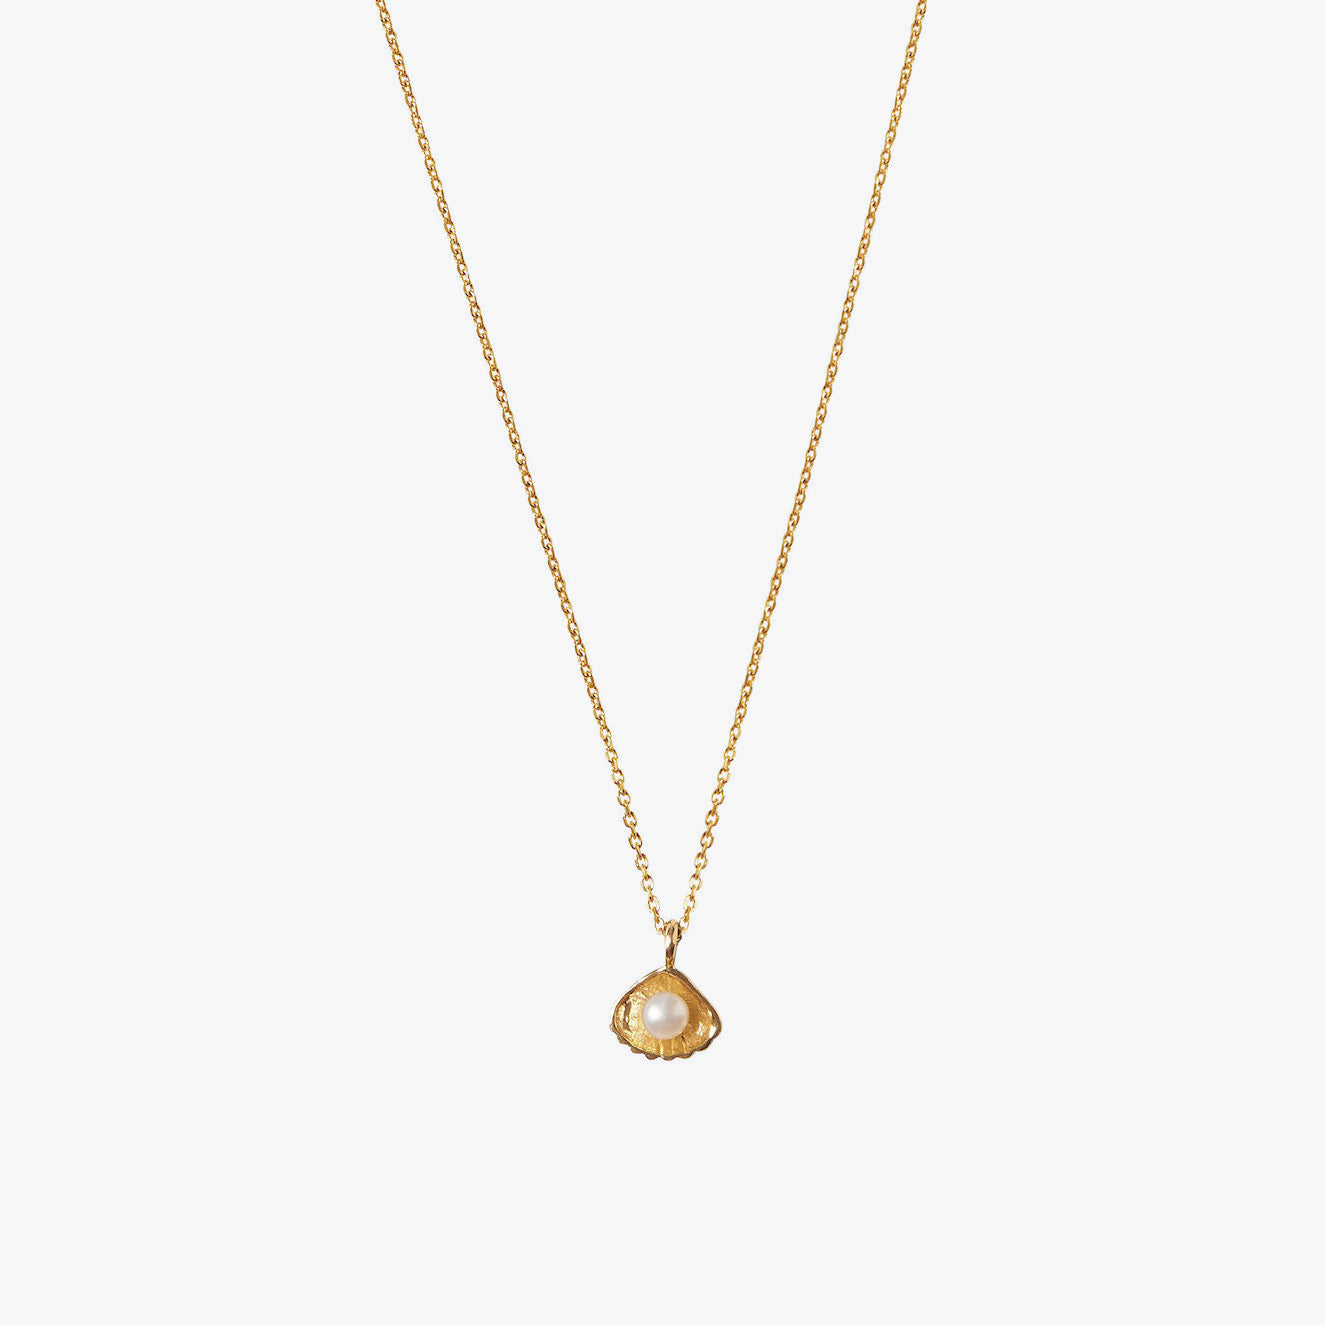 Flacq Gold - Oceano Pearls